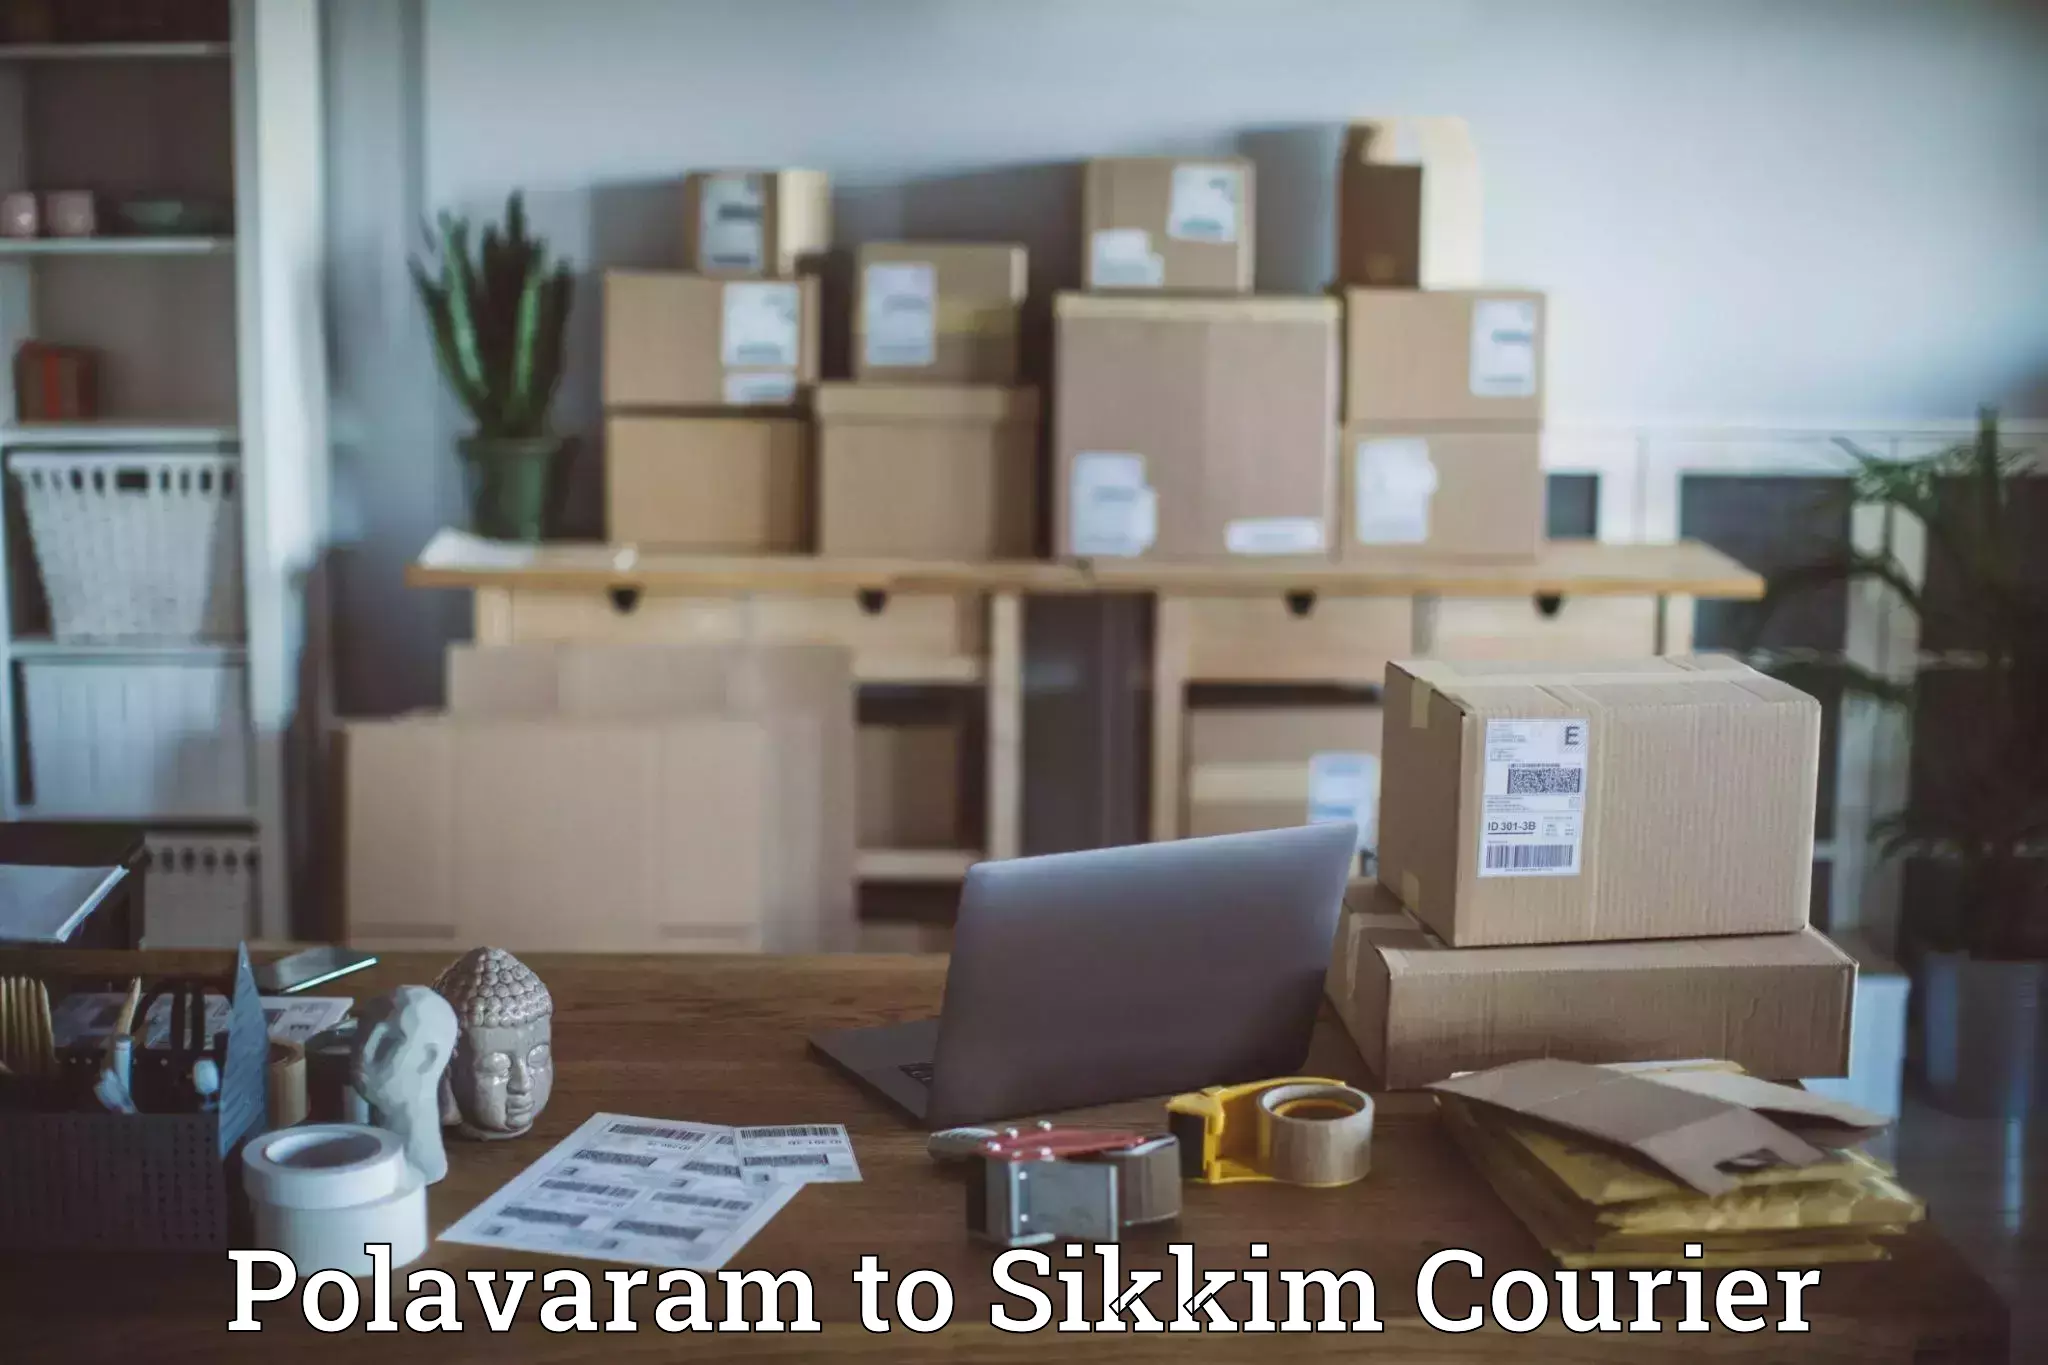 High-priority parcel service Polavaram to Pelling